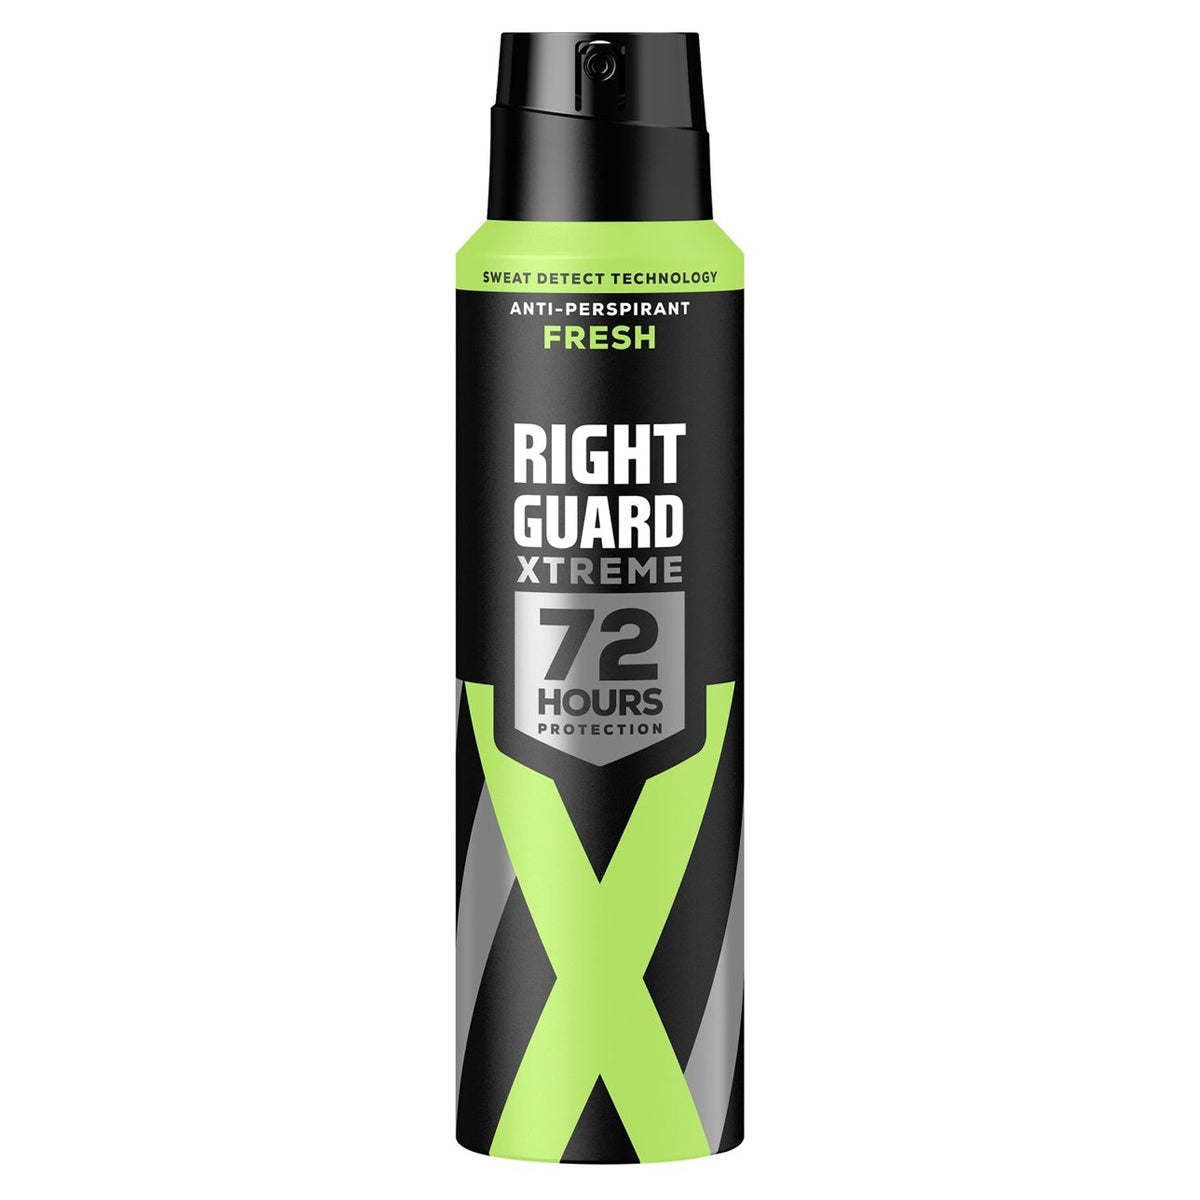 Right Guard - Xtreme Fresh 72H Anti-Perspirant Deodorant - 150ml spray on a white background.